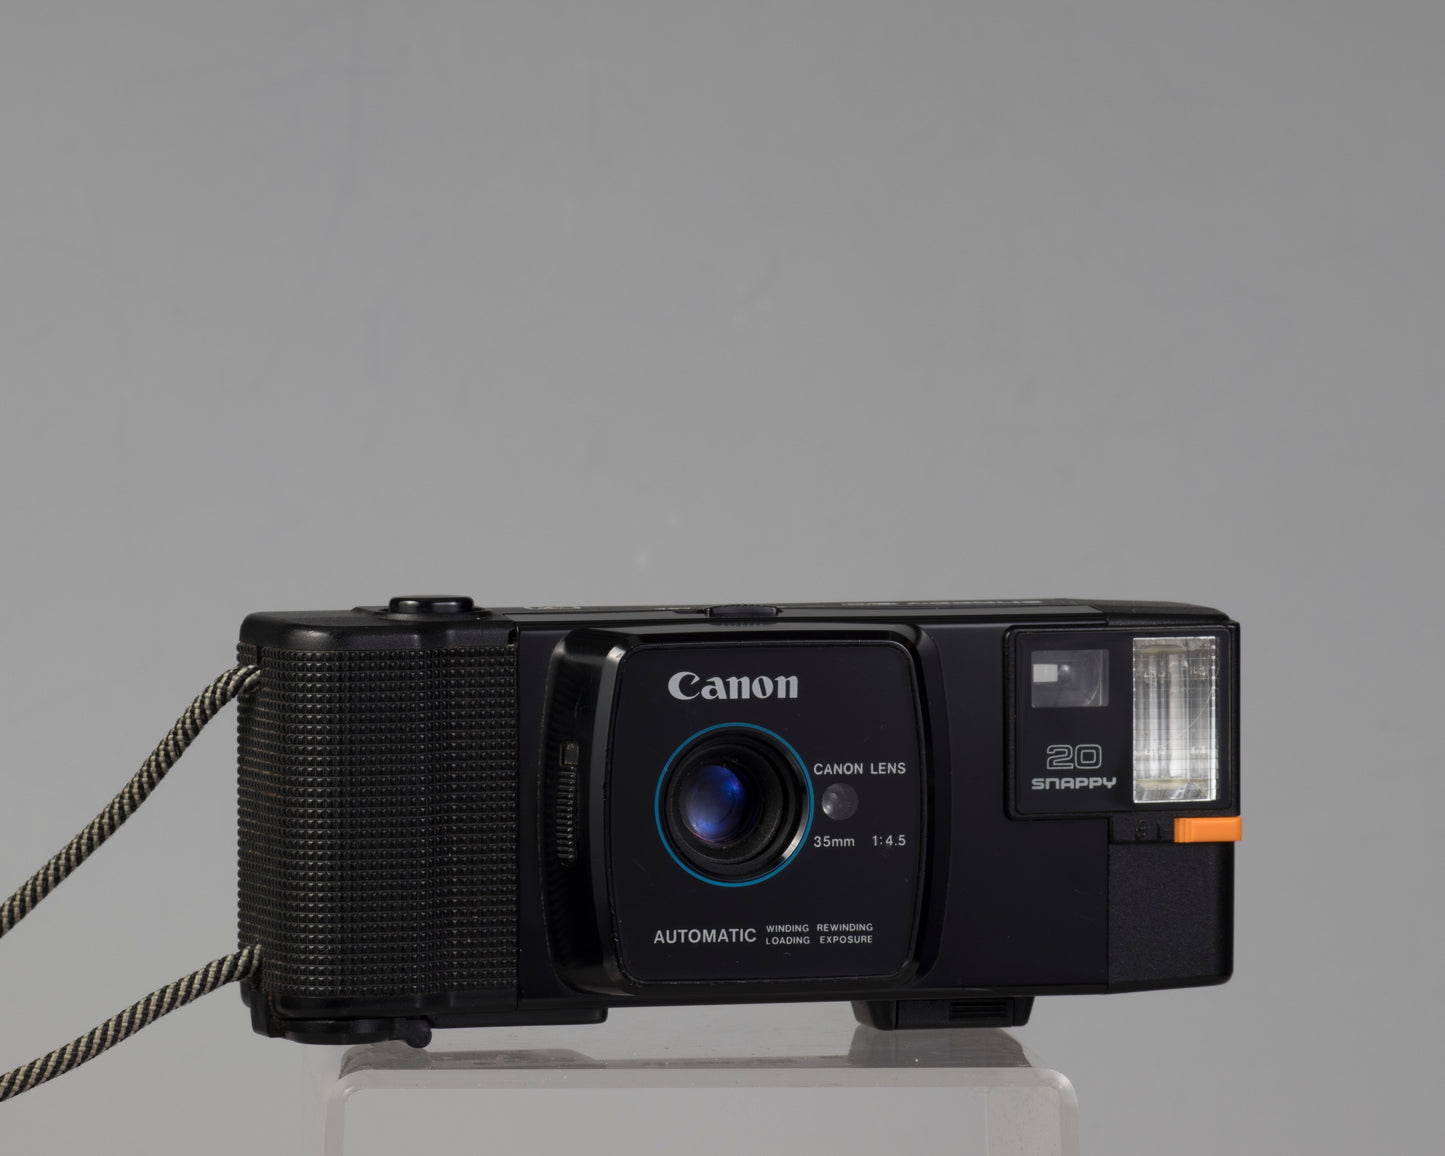 Canon Snappy 20 35mm camera (serial 1420371)